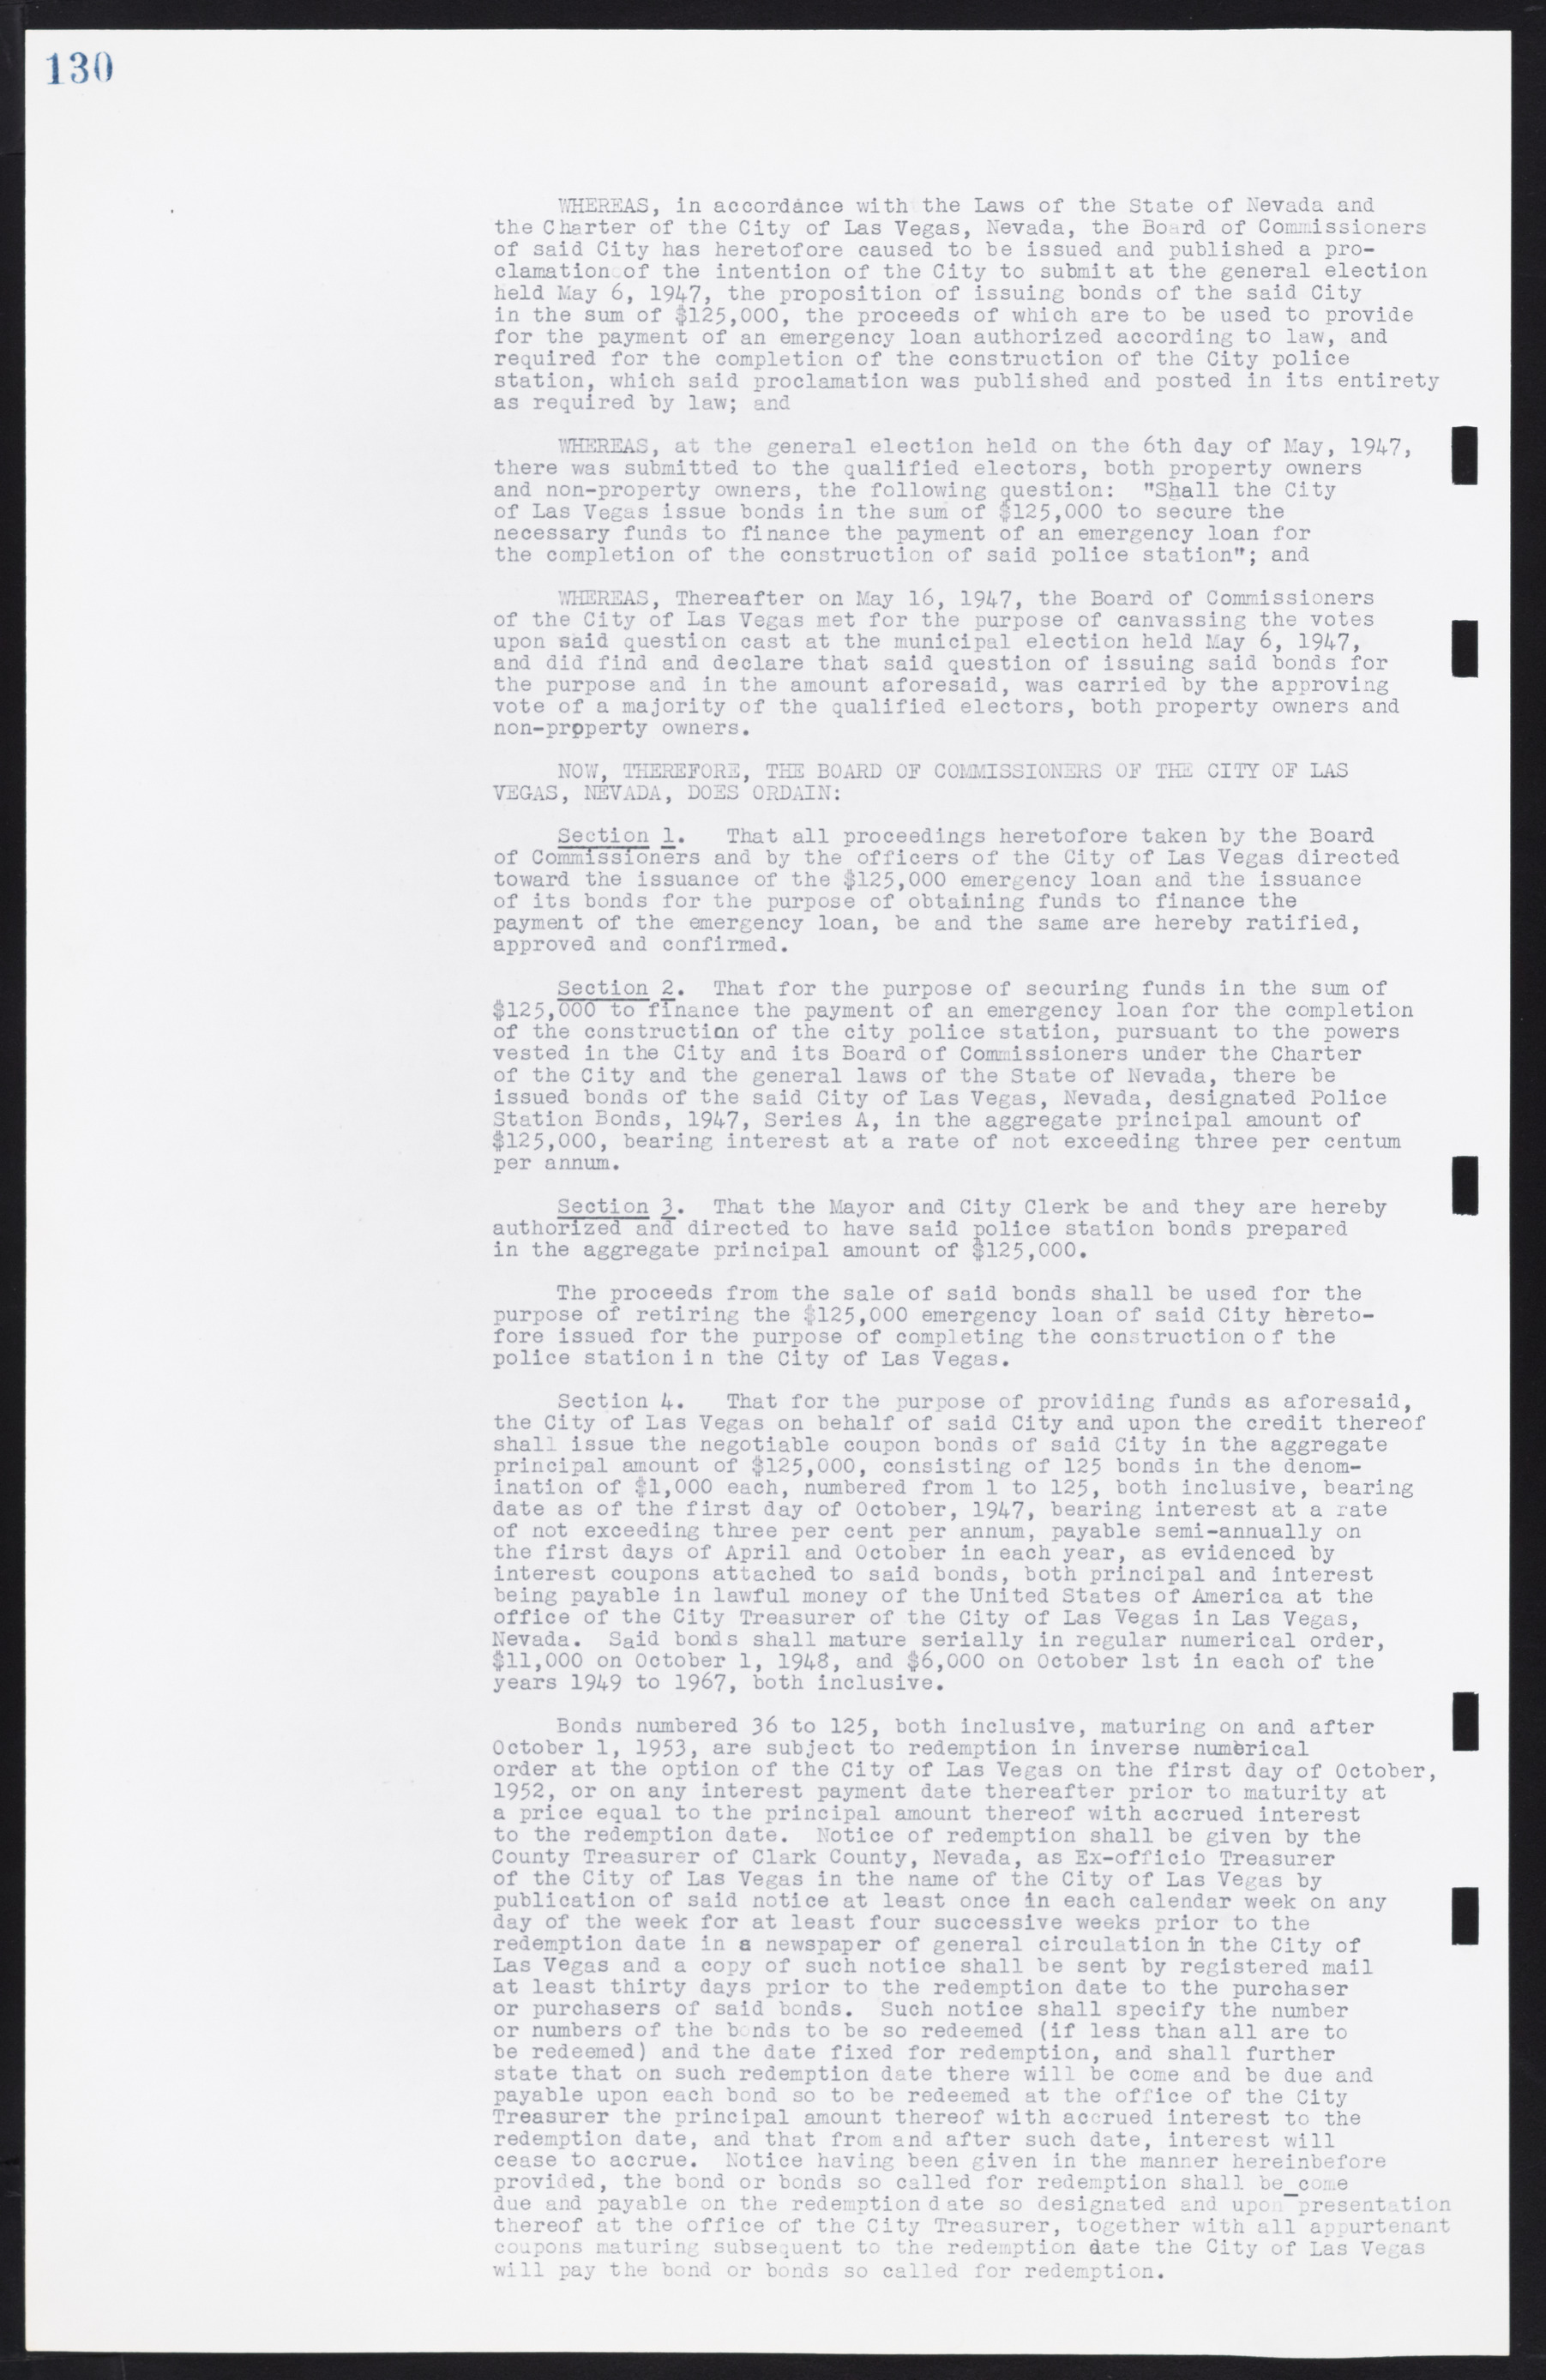 Las Vegas City Commission Minutes, January 7, 1947 to October 26, 1949, lvc000006-148